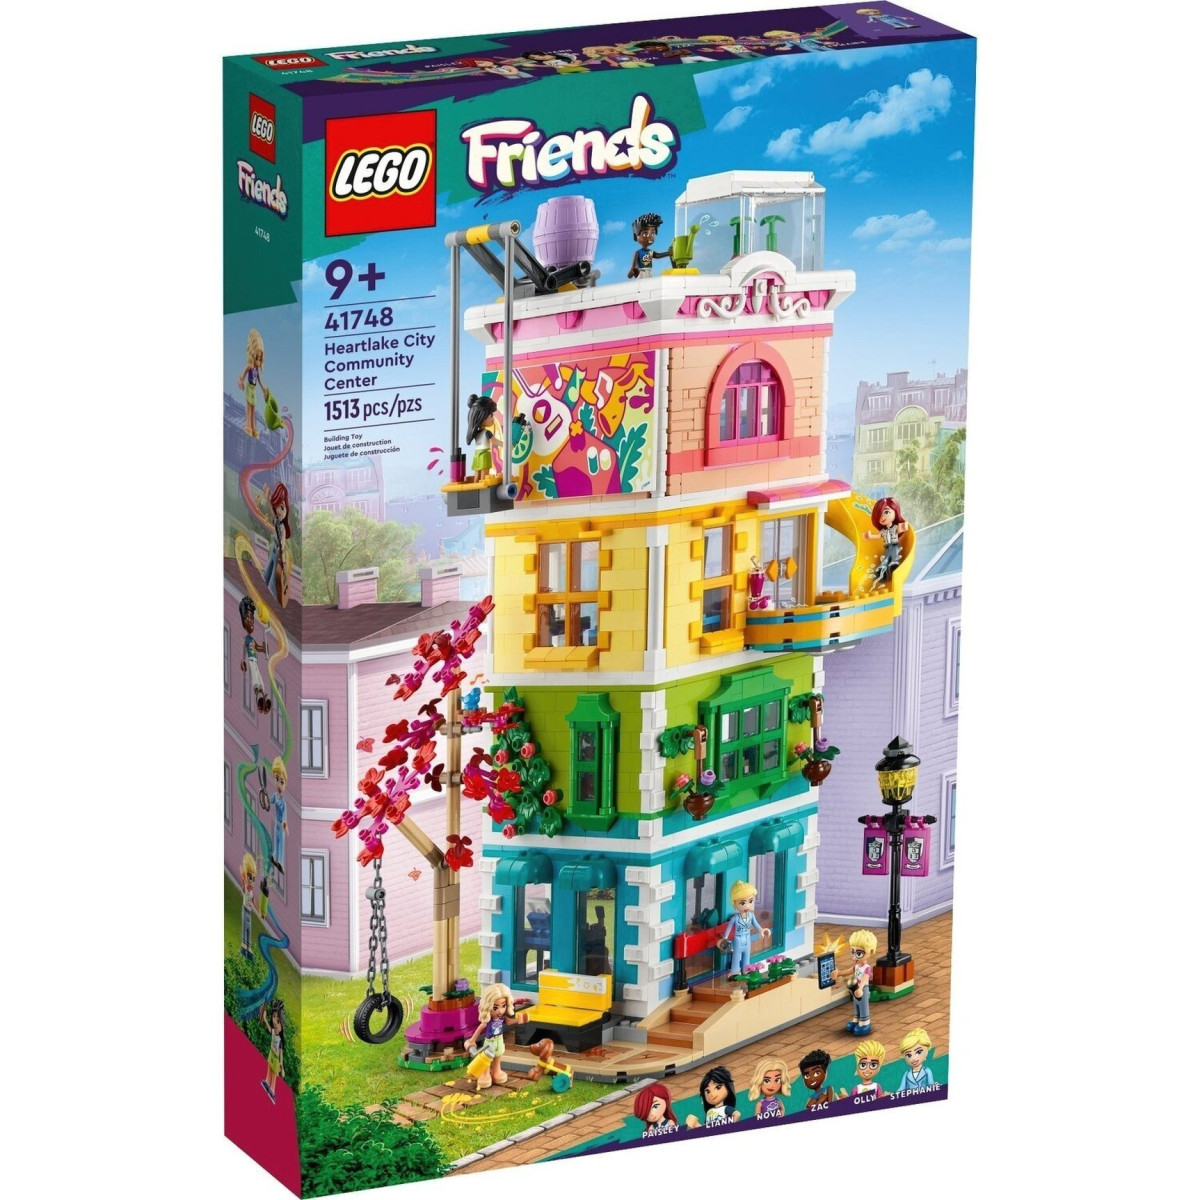 Конструктор LEGO Friends Хартлейк-Сити. Общественный центр (41748)